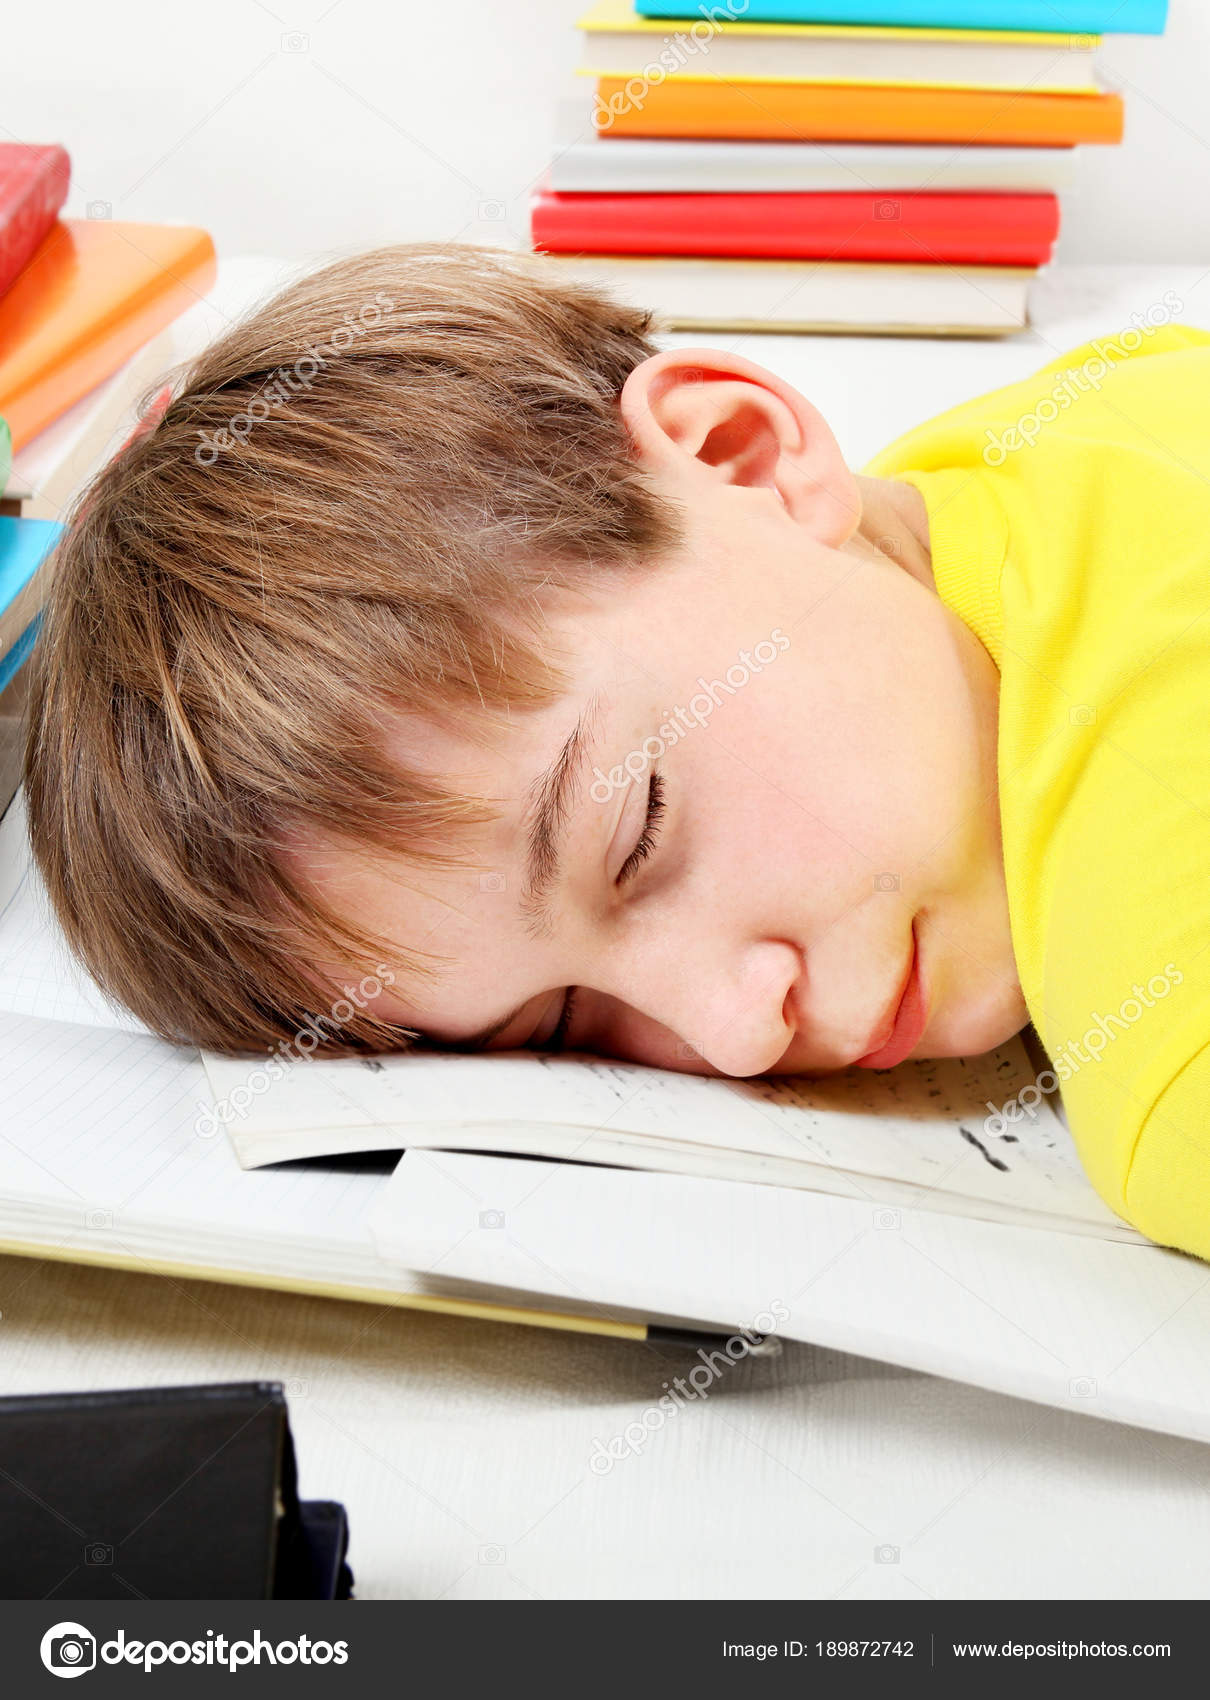 Kid Sleep With A Books Stock Photo C Sabphoto 189872742